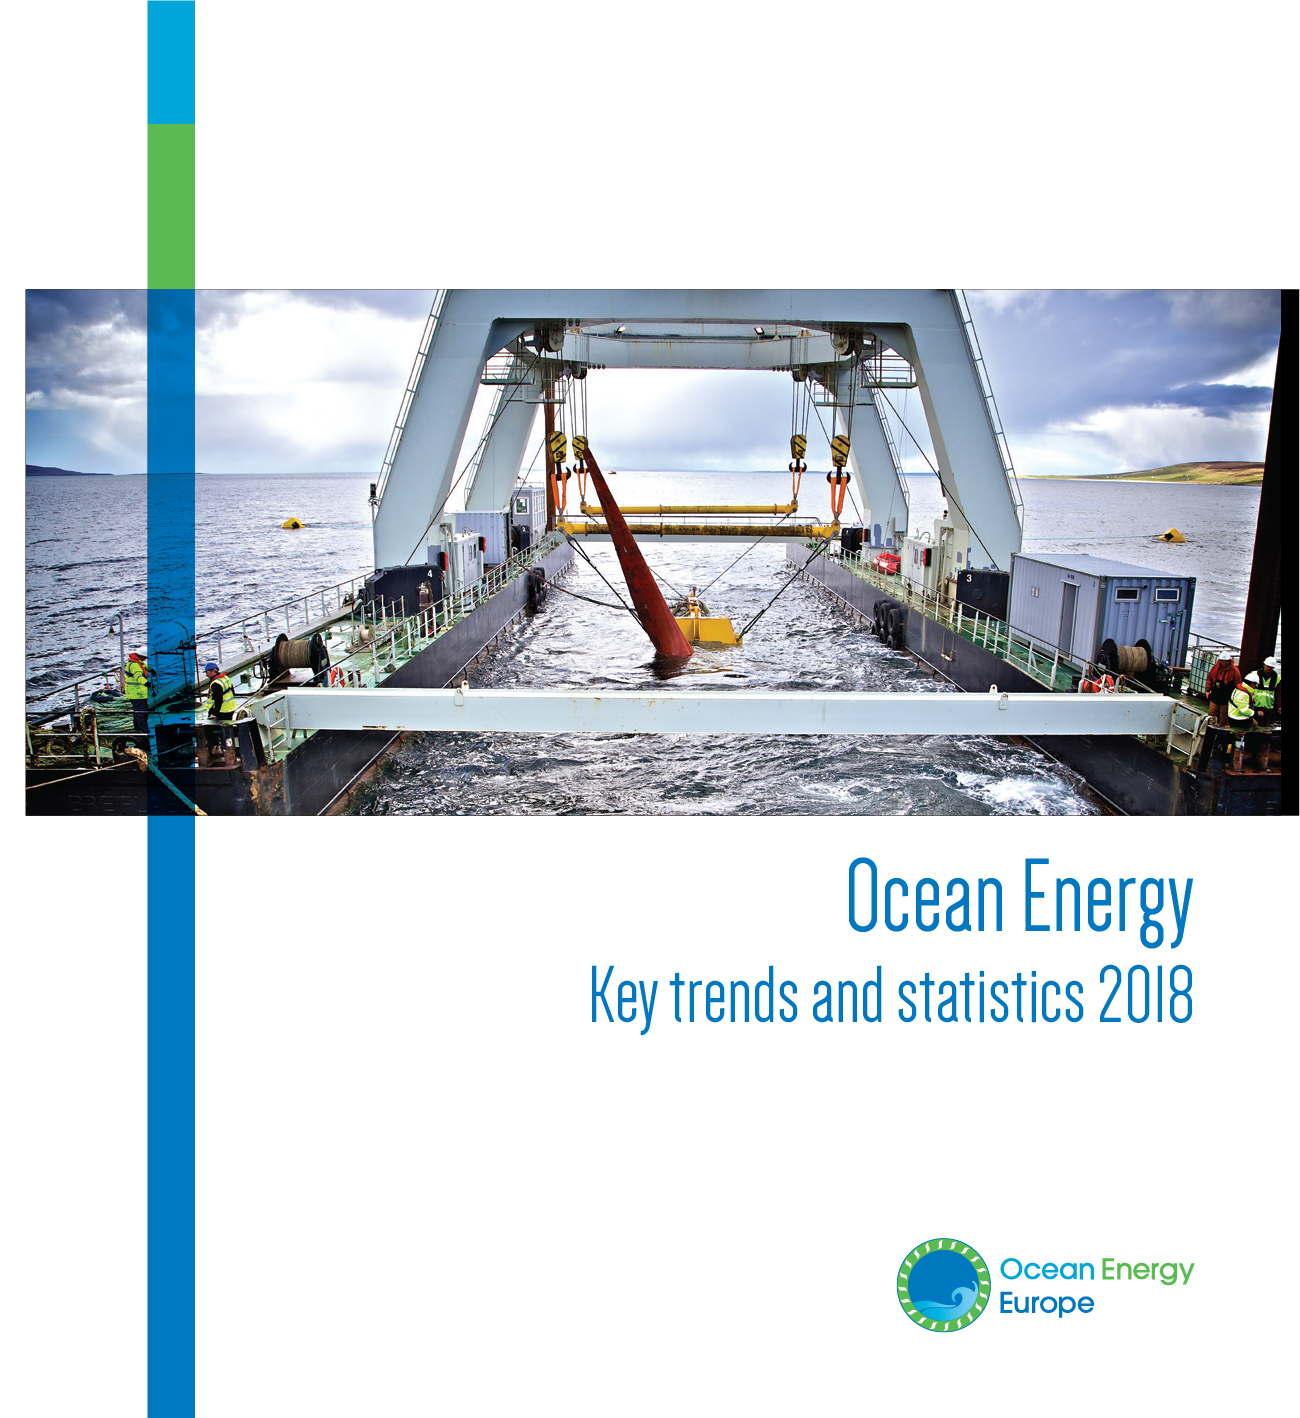 Ocean Energy key trends and statistics 2018